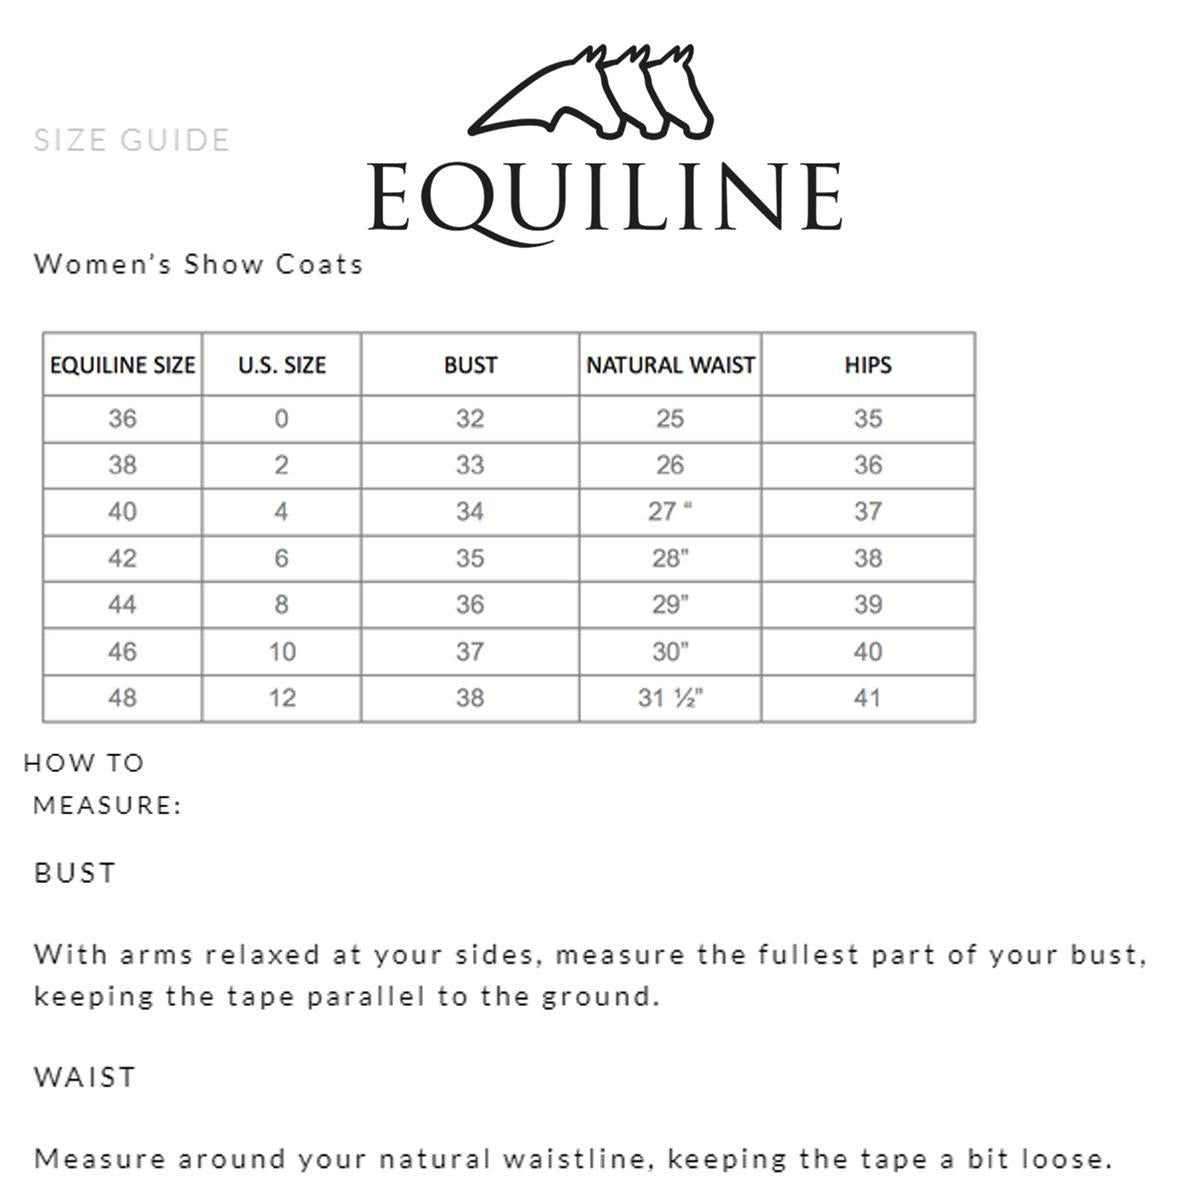 Equiline Women's Casur B-Move Competition Jacket